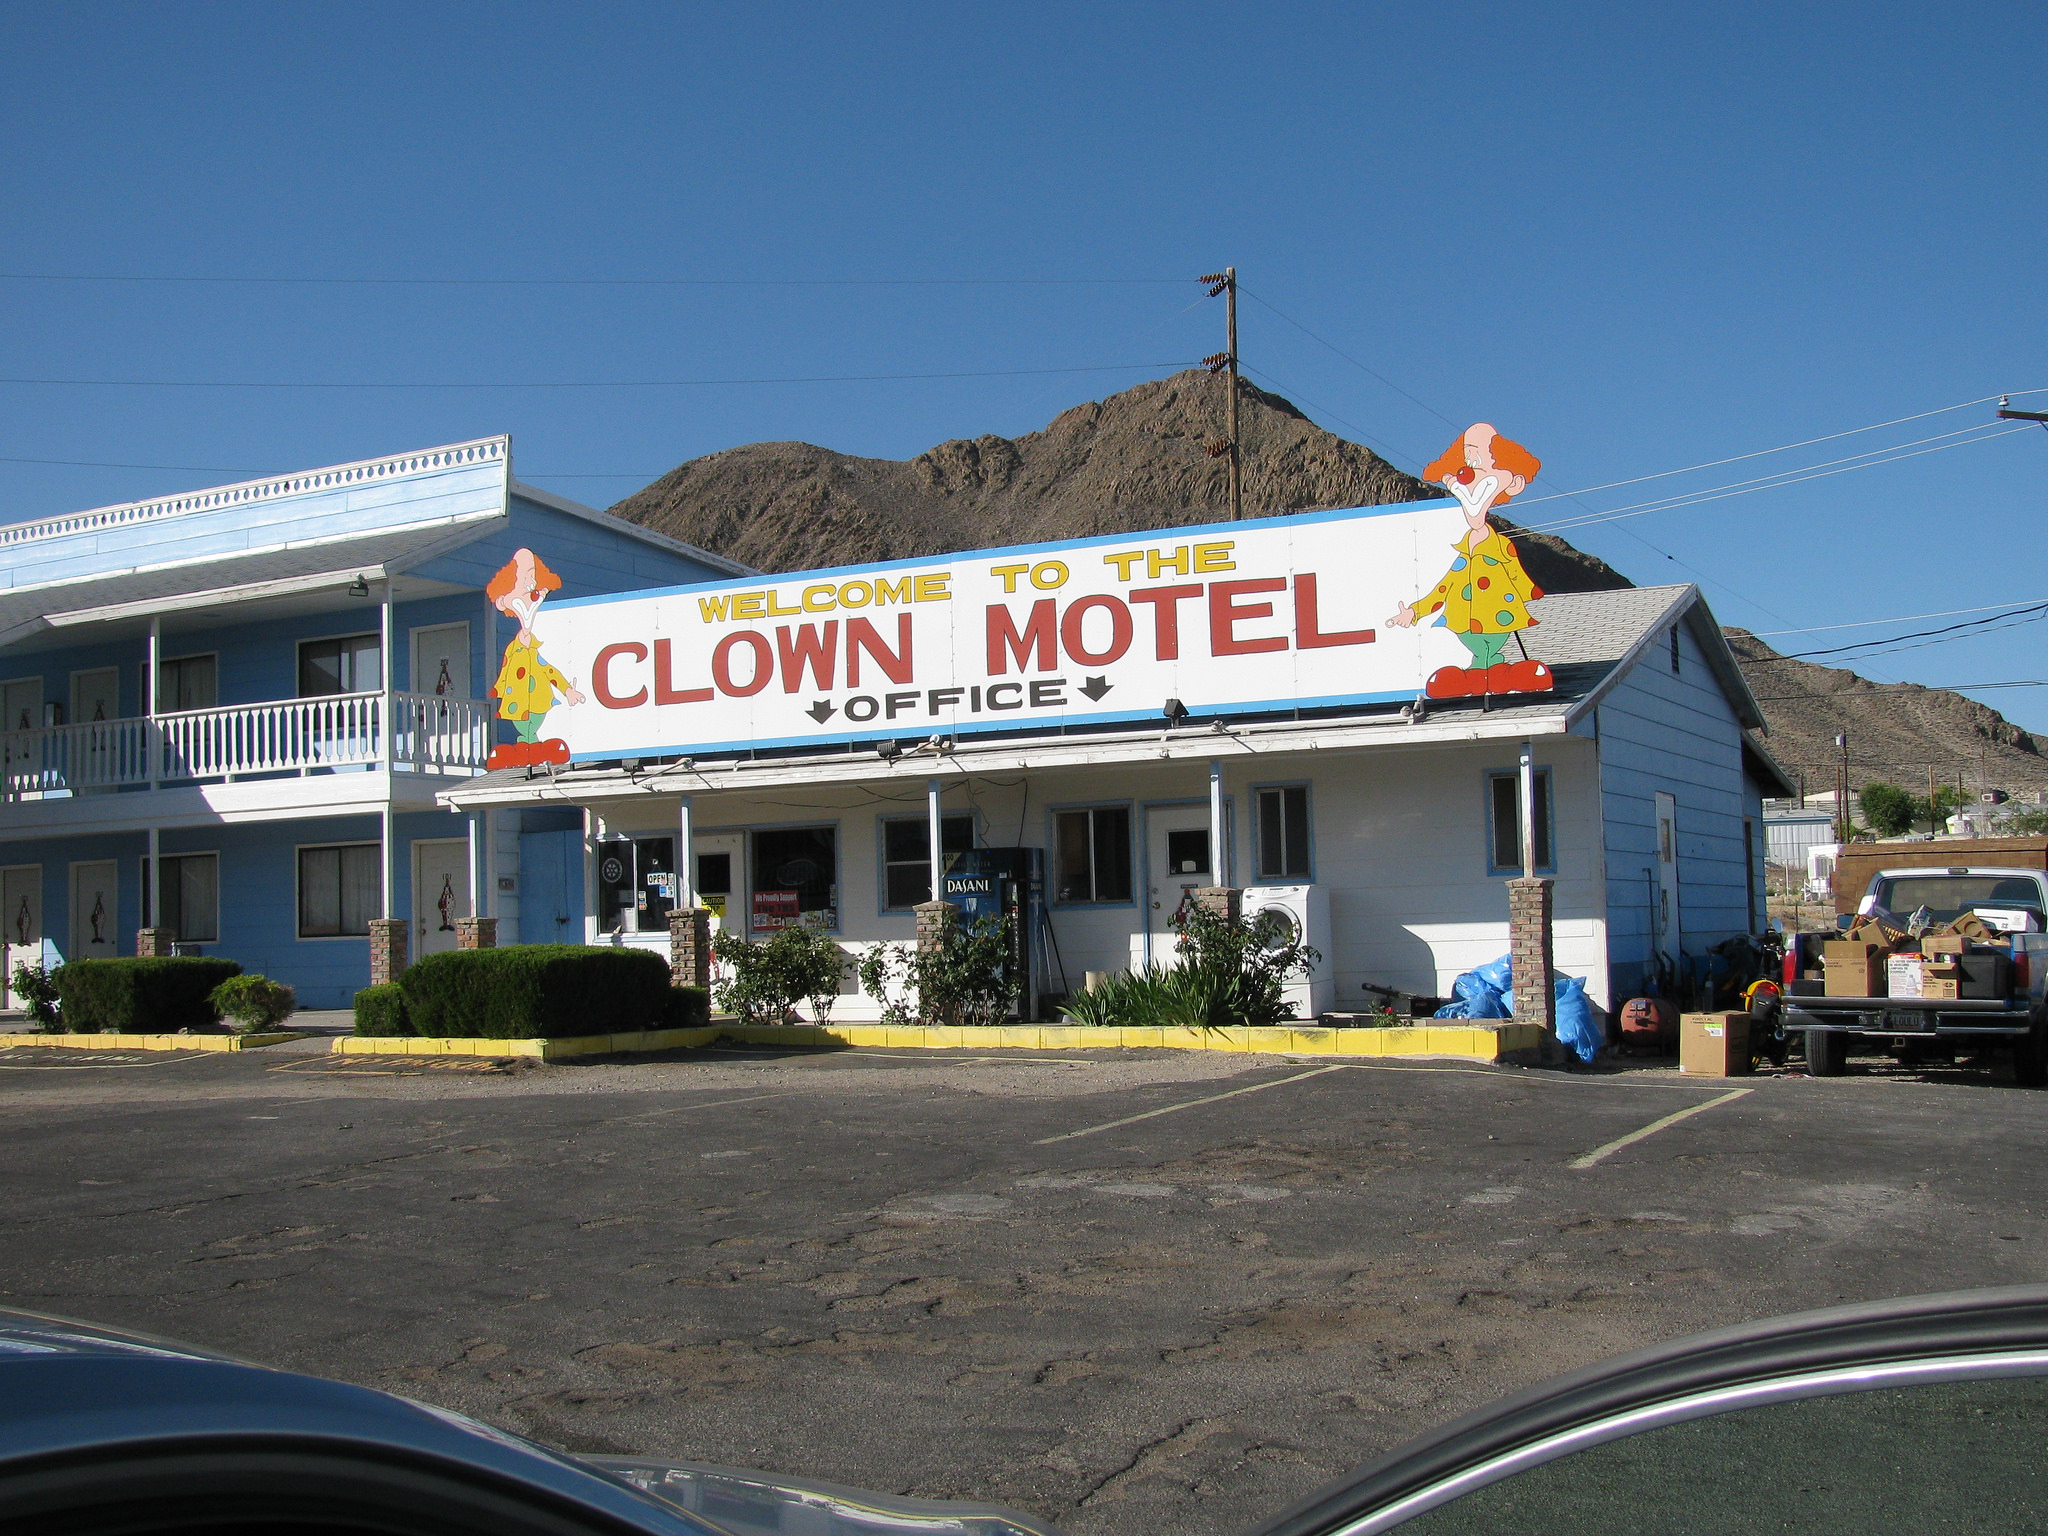 Creepy Clown Motel